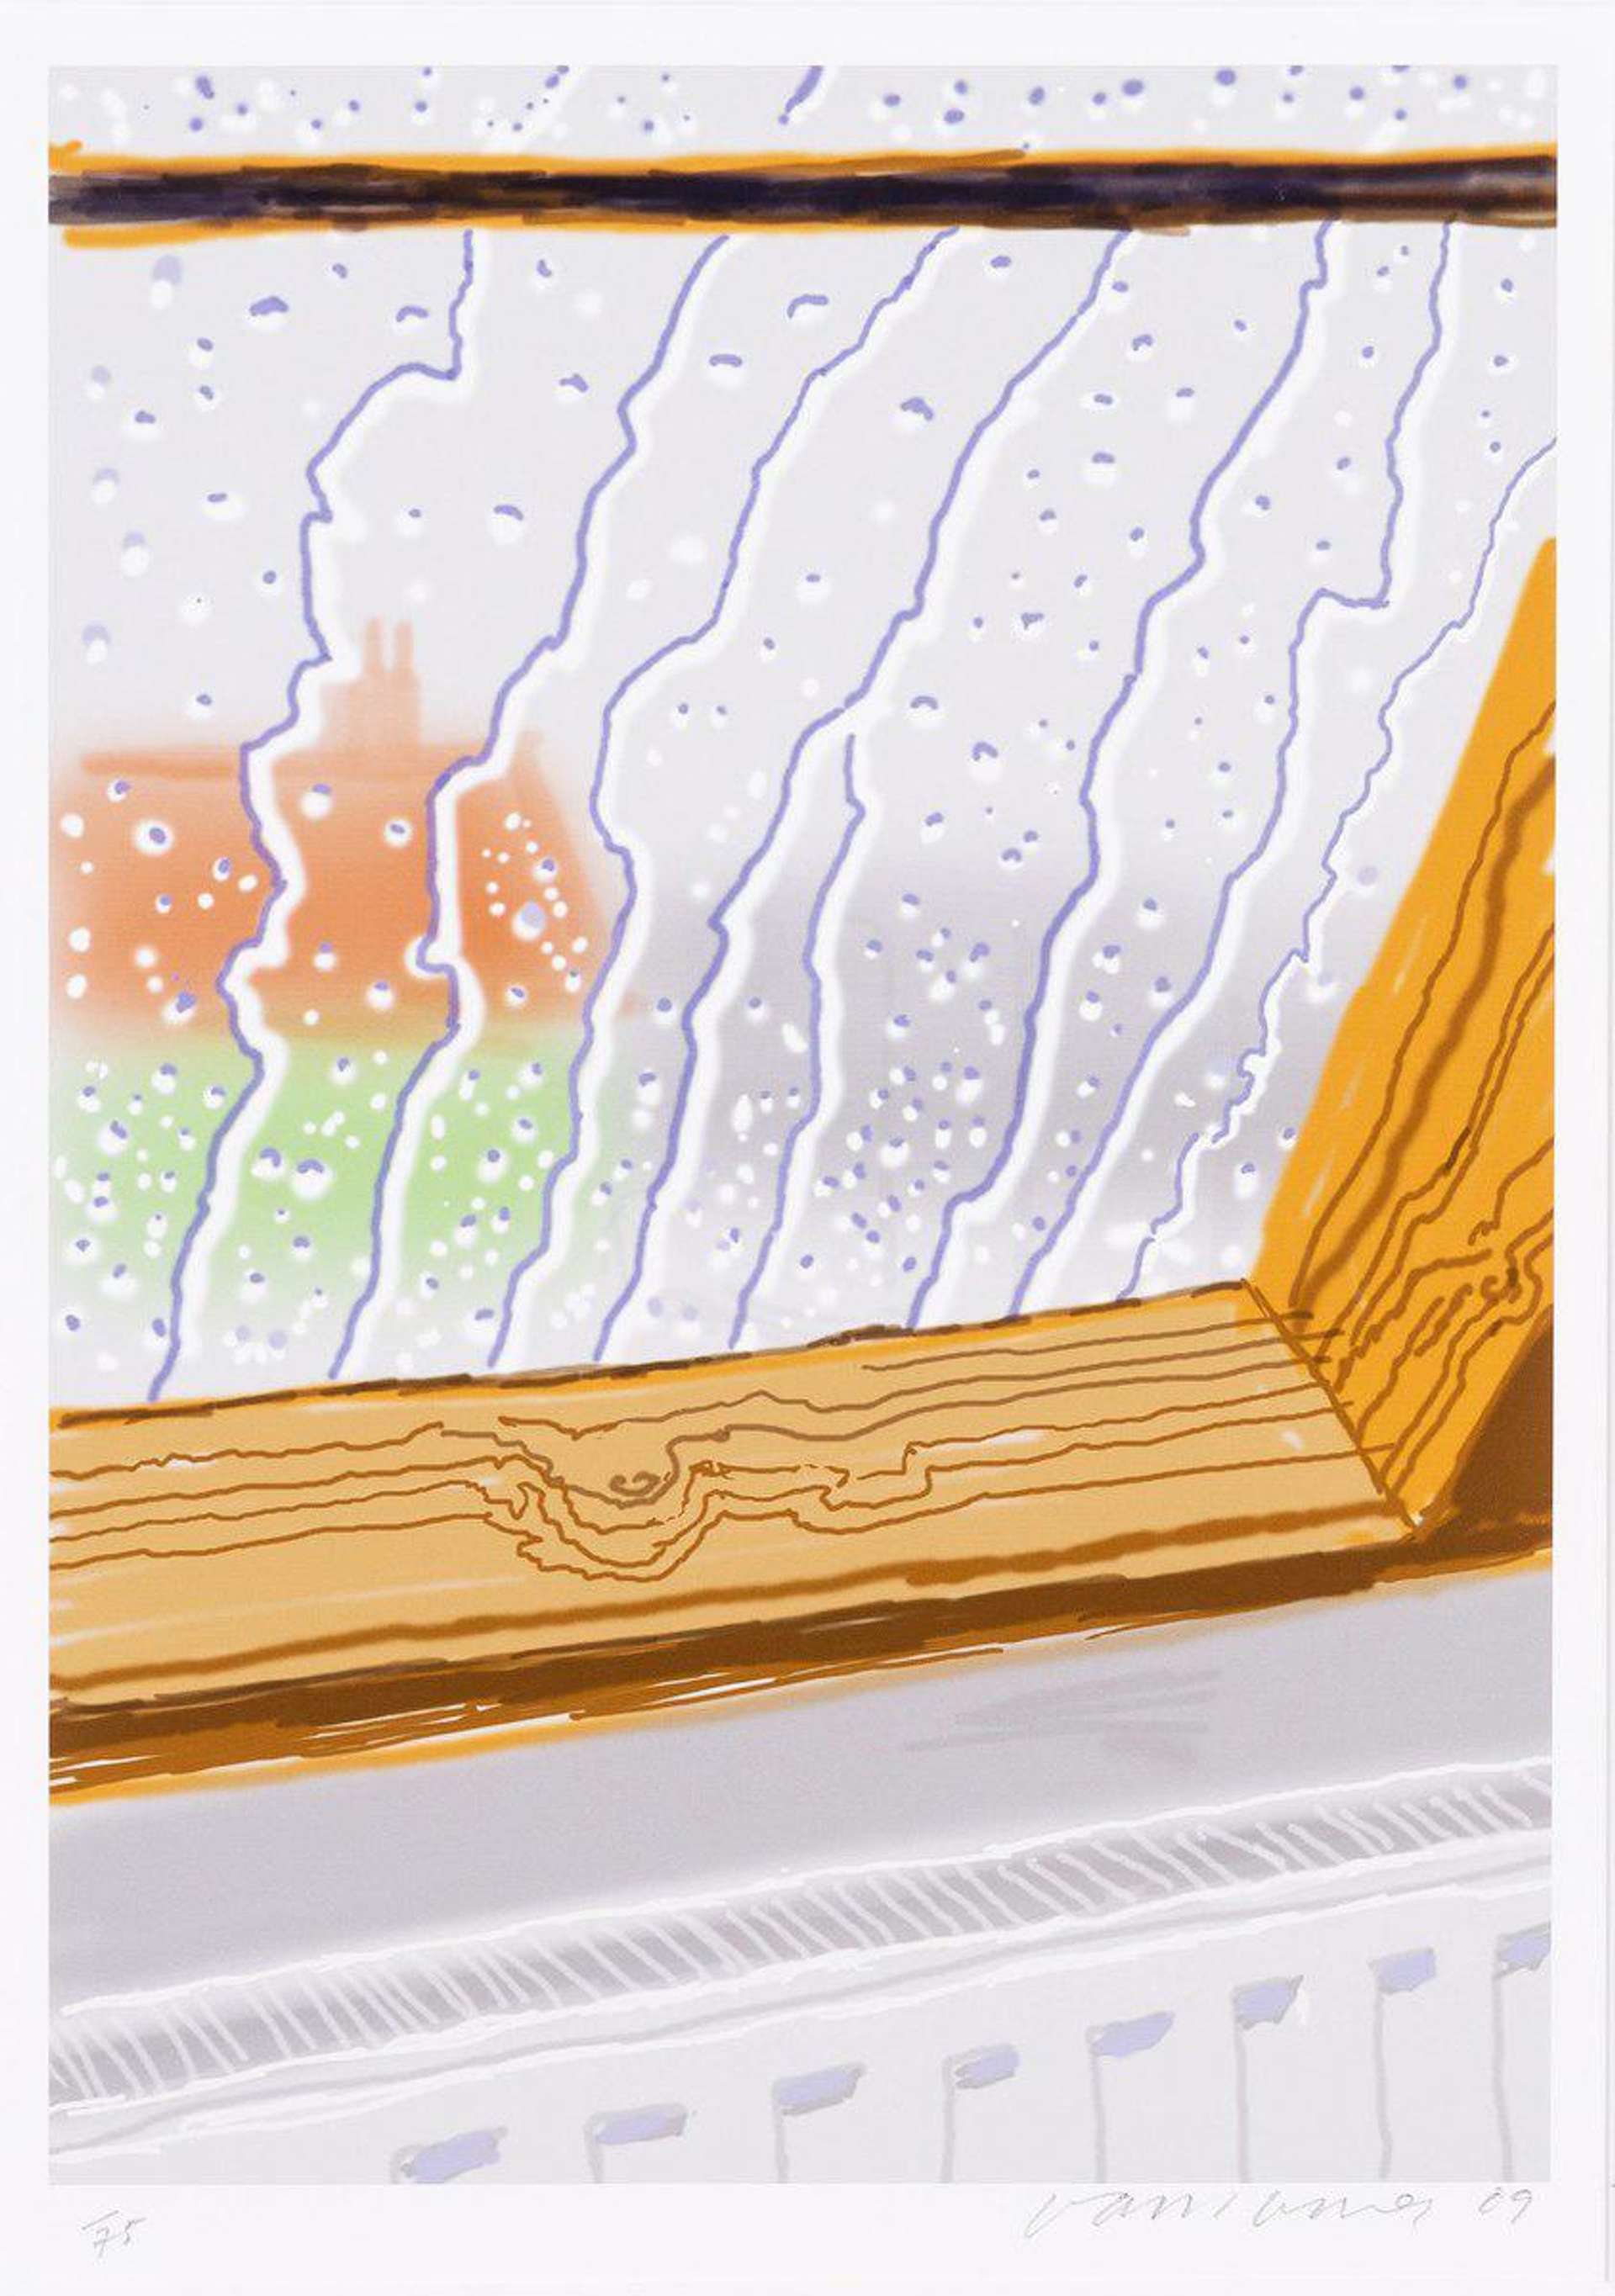 Rain On The Studio Window by David Hockney - MyArtBroker